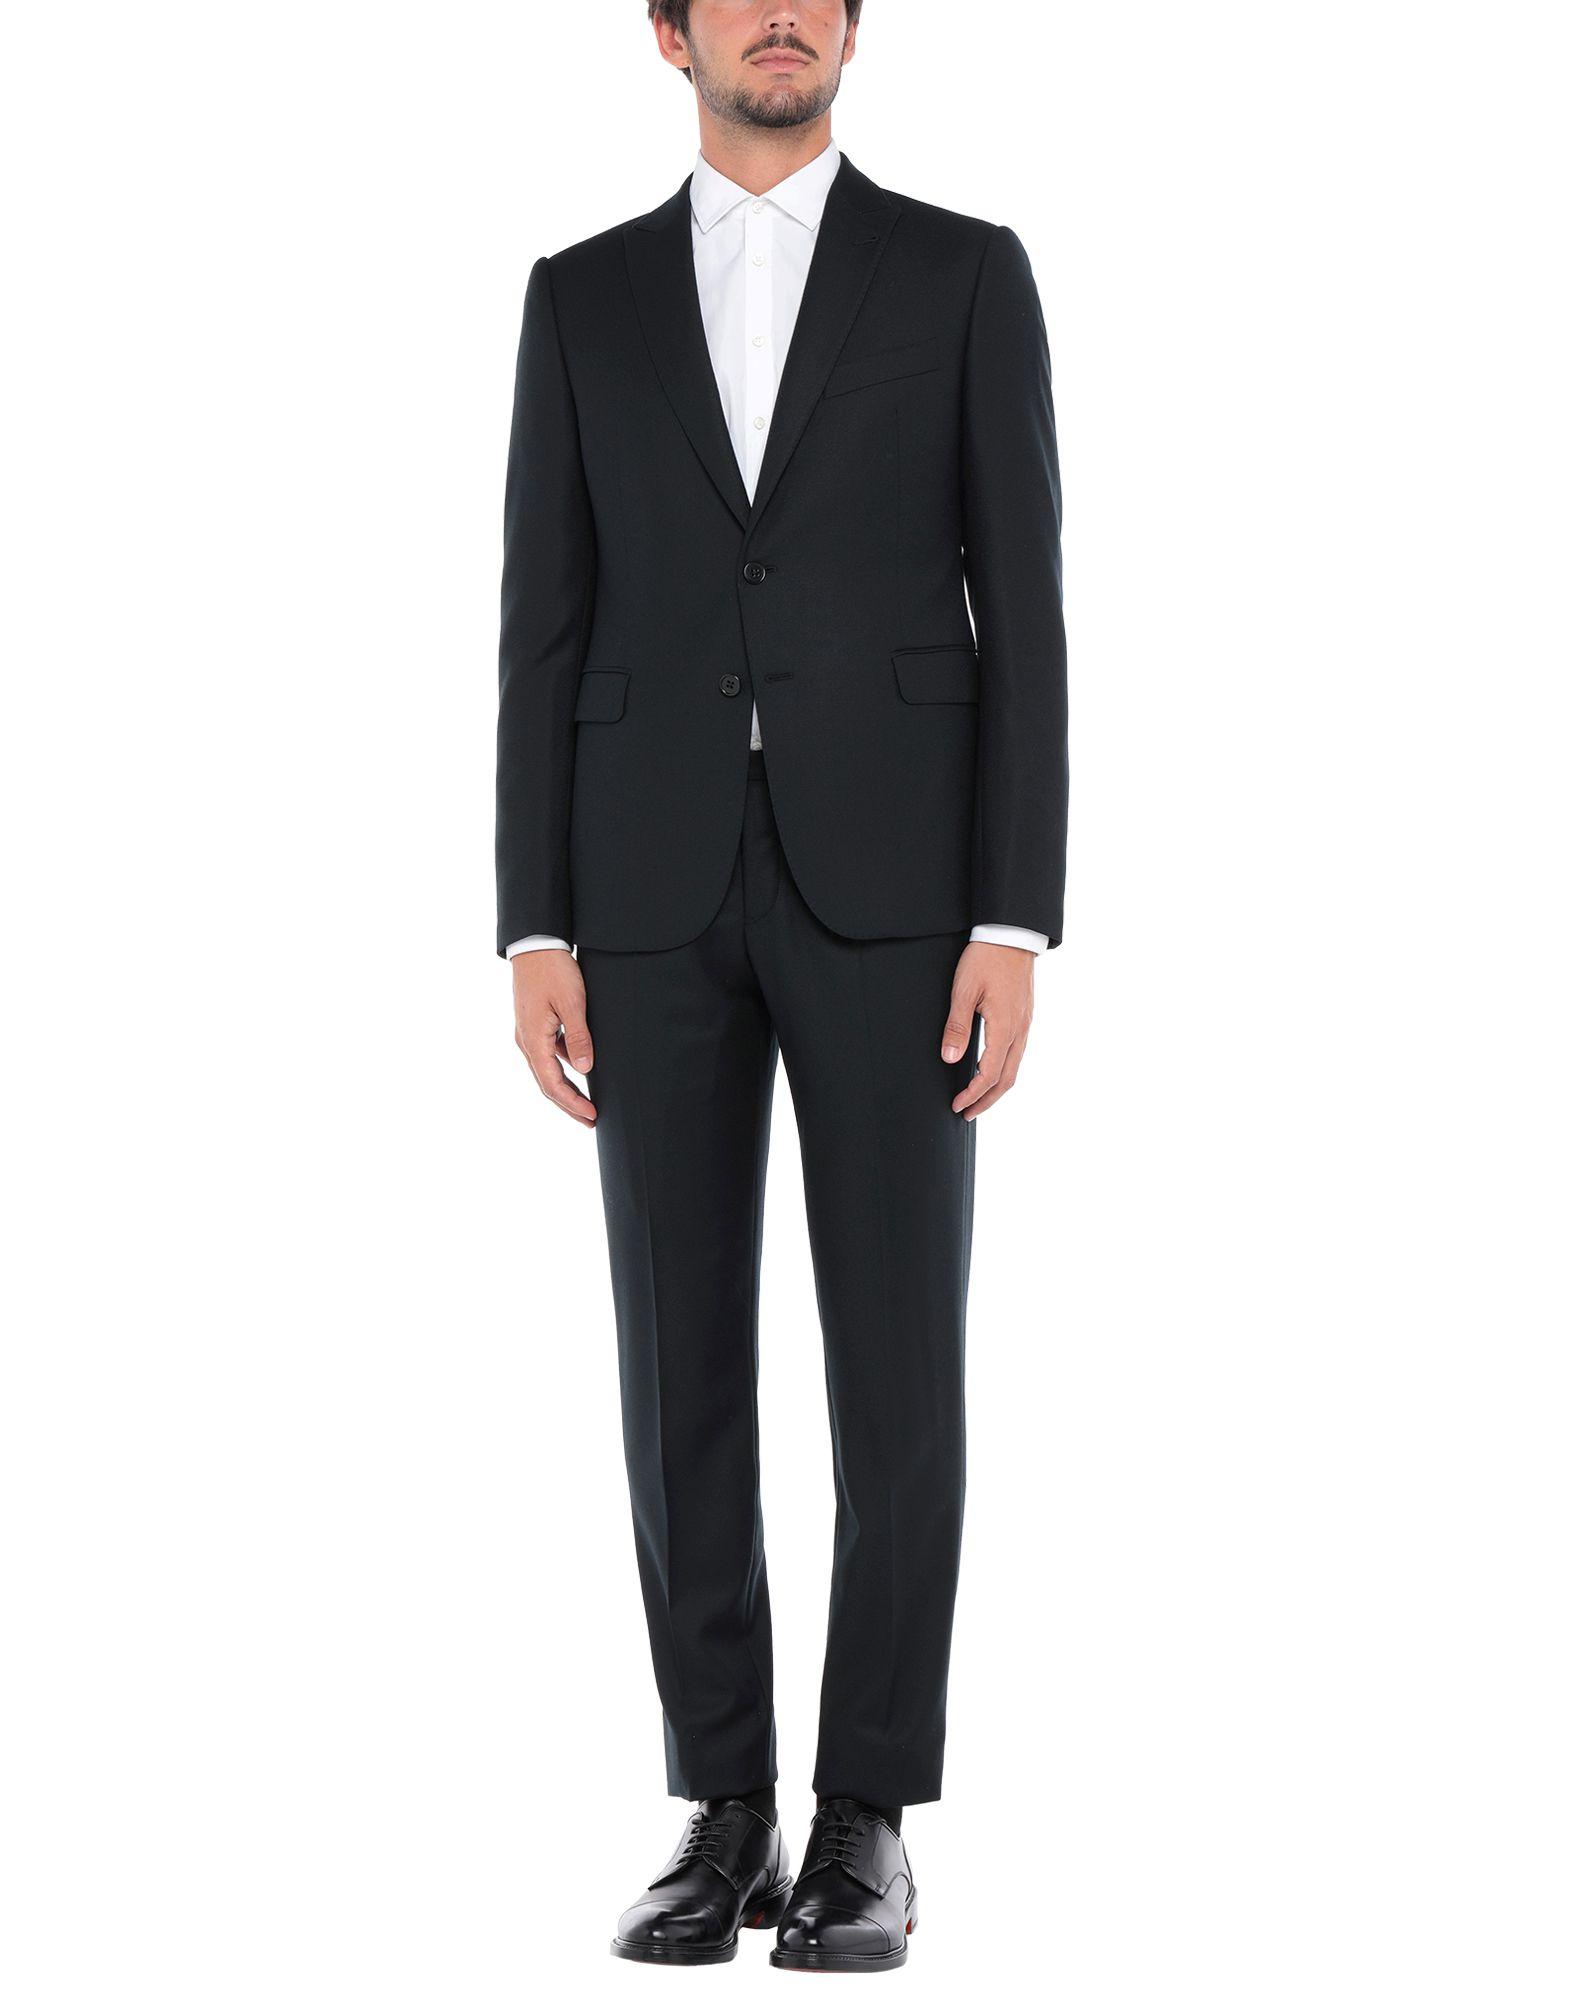 Armani Suit in Black for Men - Lyst